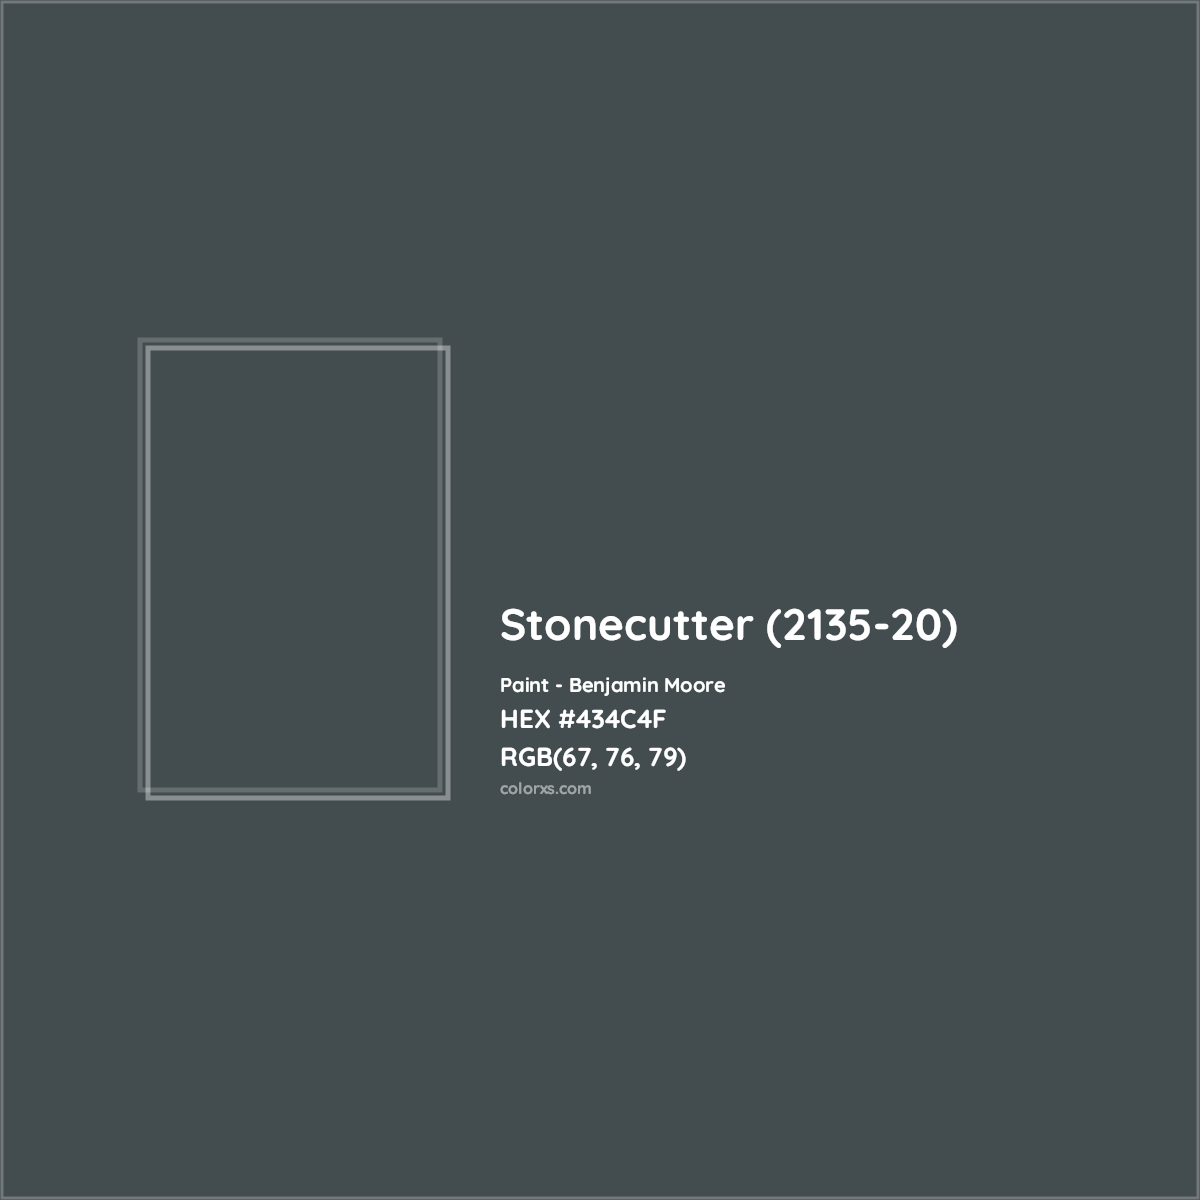 HEX #434C4F Stonecutter (2135-20) Paint Benjamin Moore - Color Code